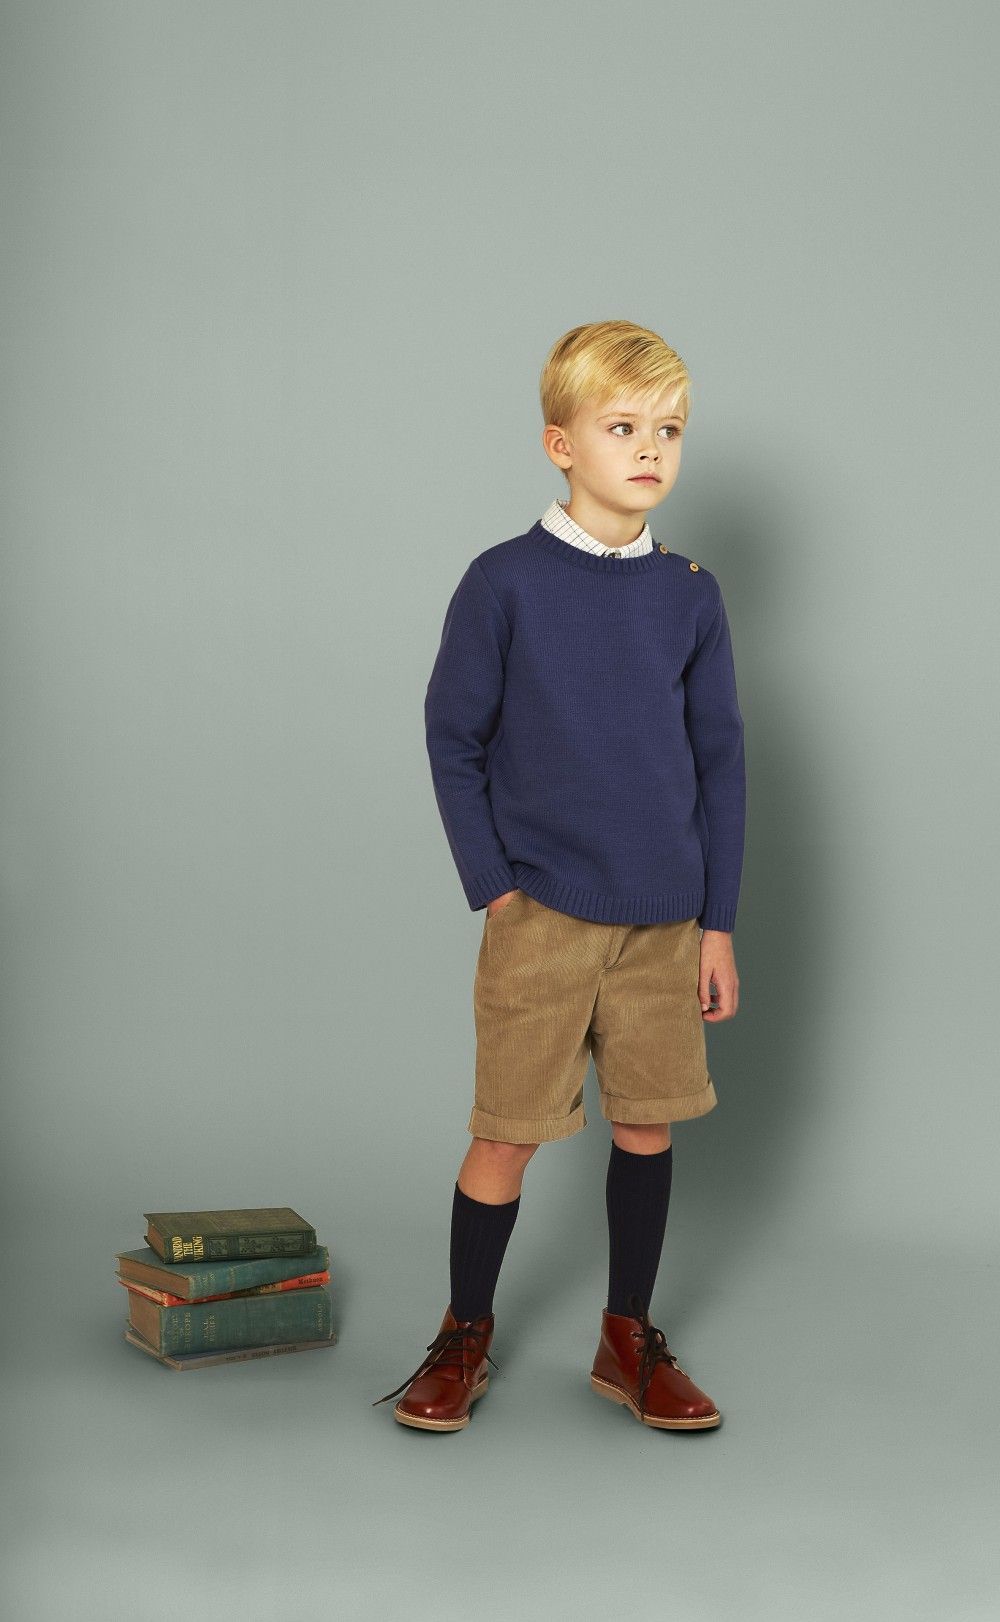 Elegant, Classic Clothes for Boys | Pepa & Co. - Elegant, Classic Clothes for Boys | Pepa & Co. -   15 style Vintage boy ideas